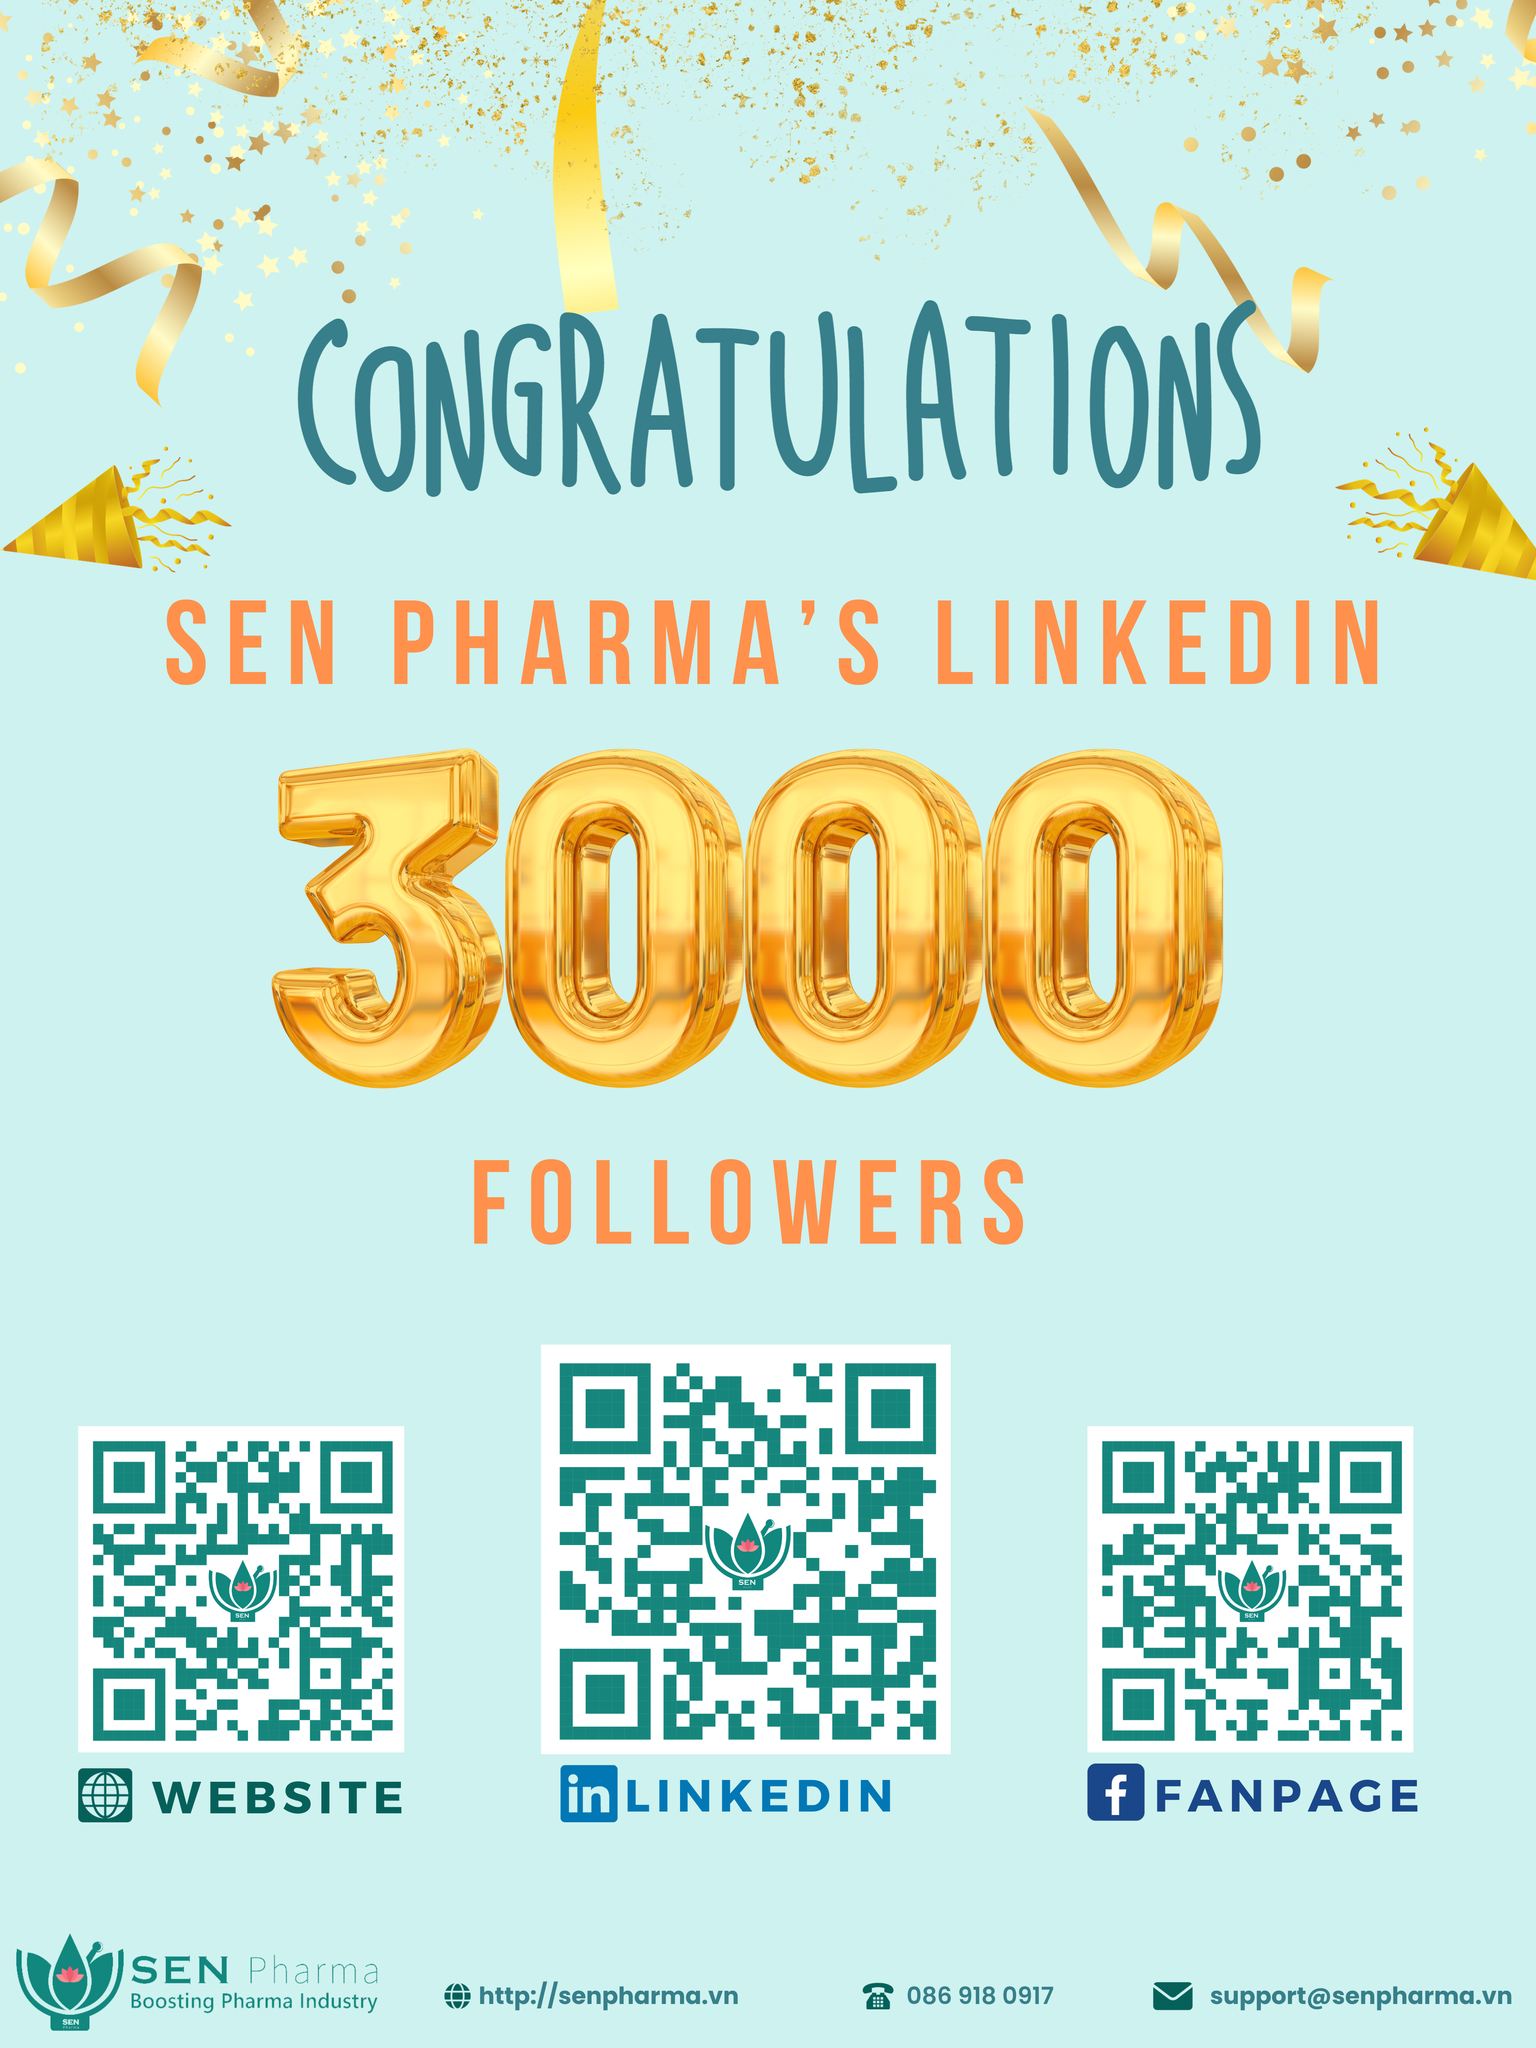 SEN Pharma's LinkedIn reaches 3000 followers